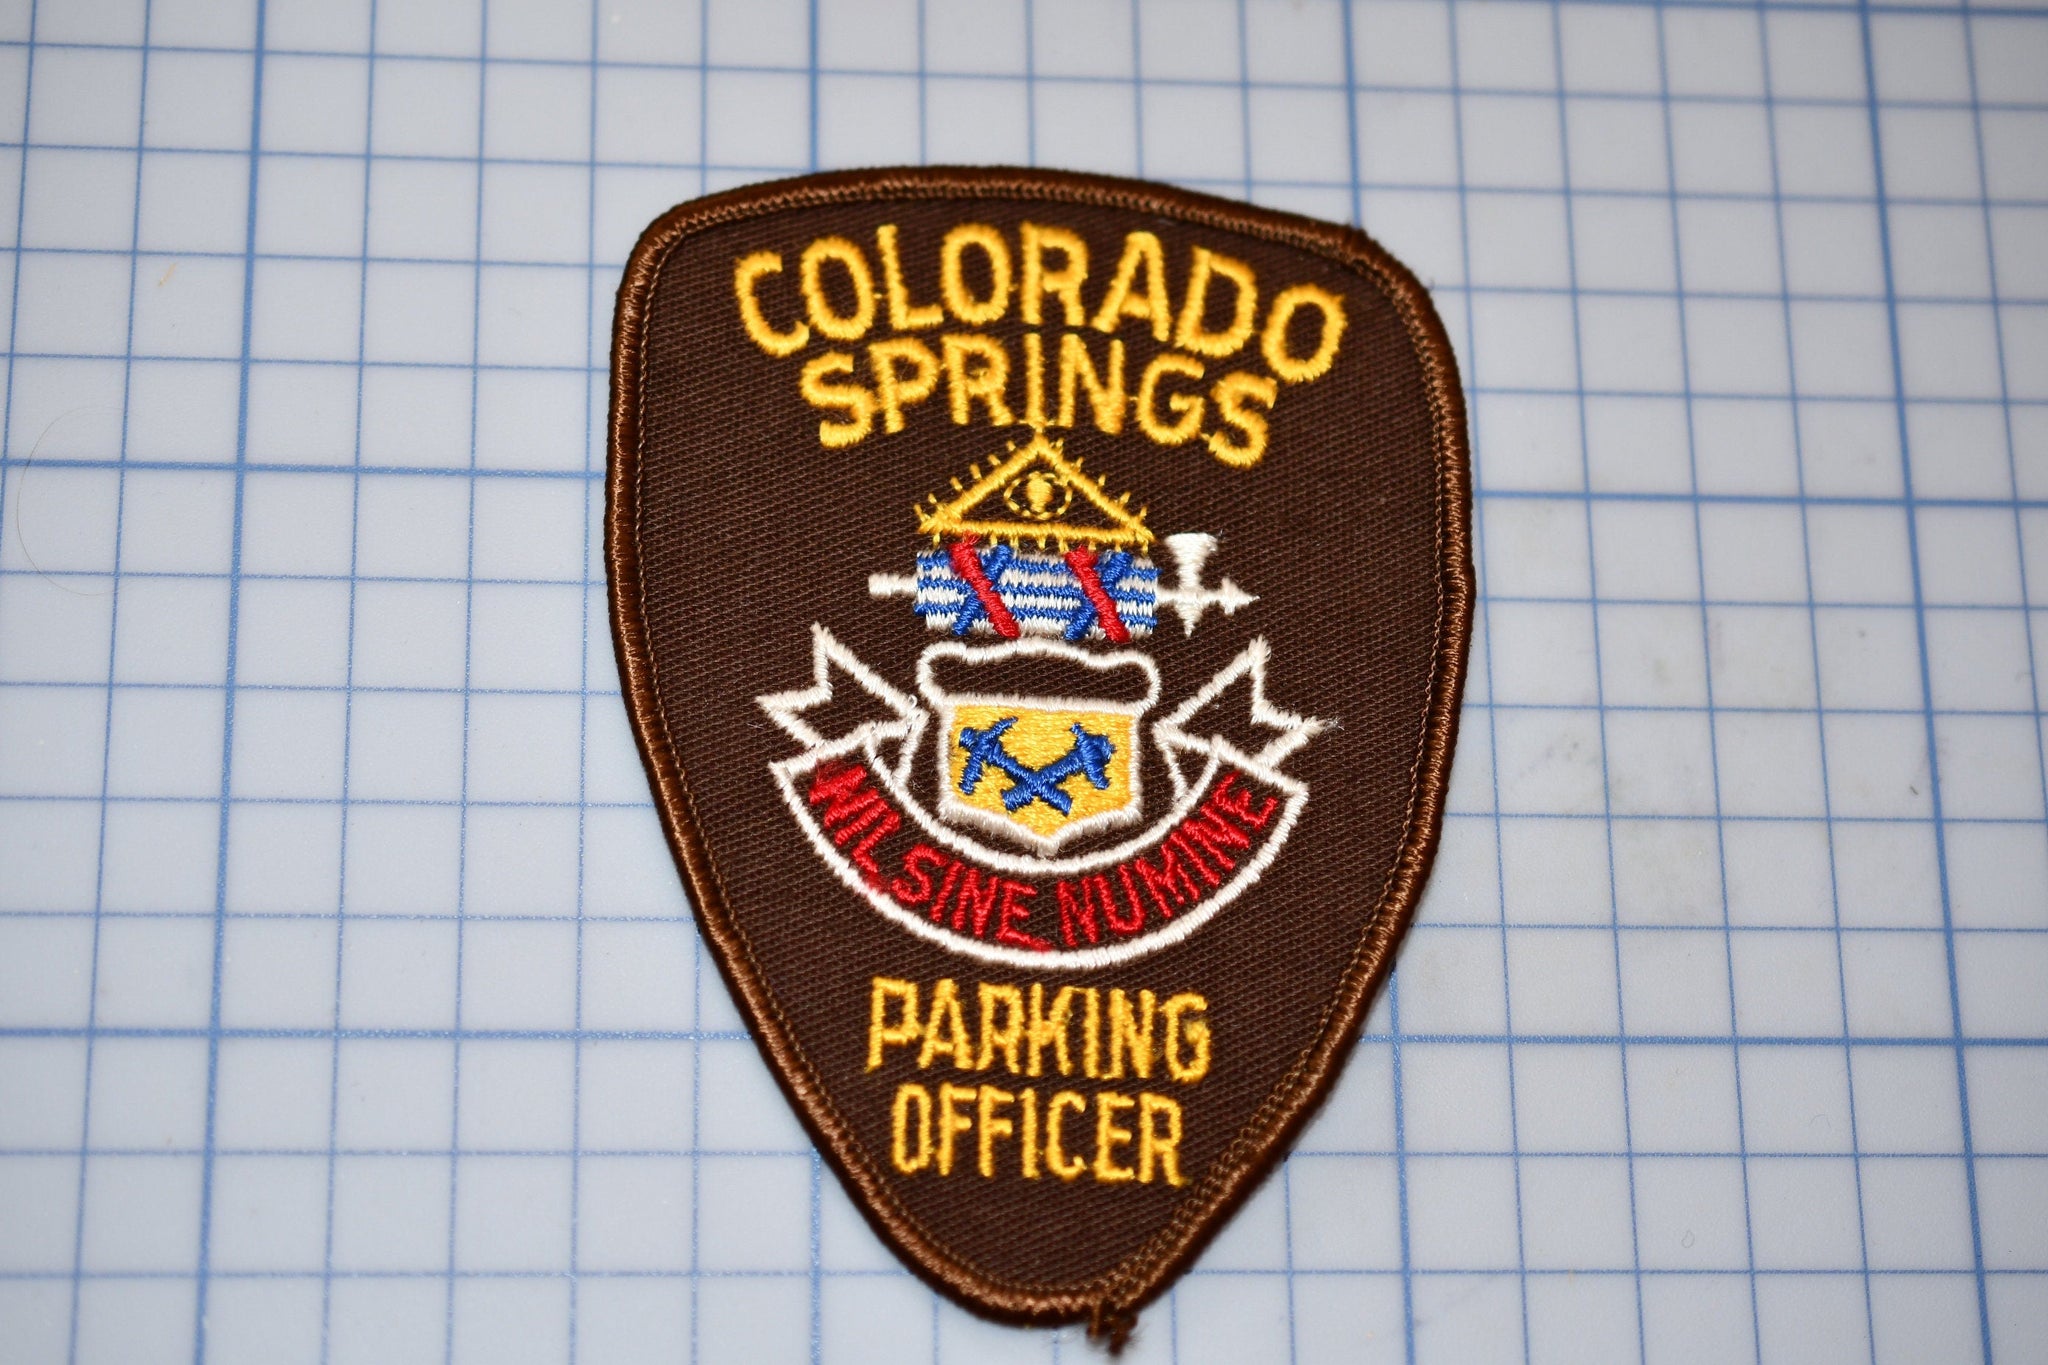 Colorado Springs Colorado Parking Officer Patch (S4-300)